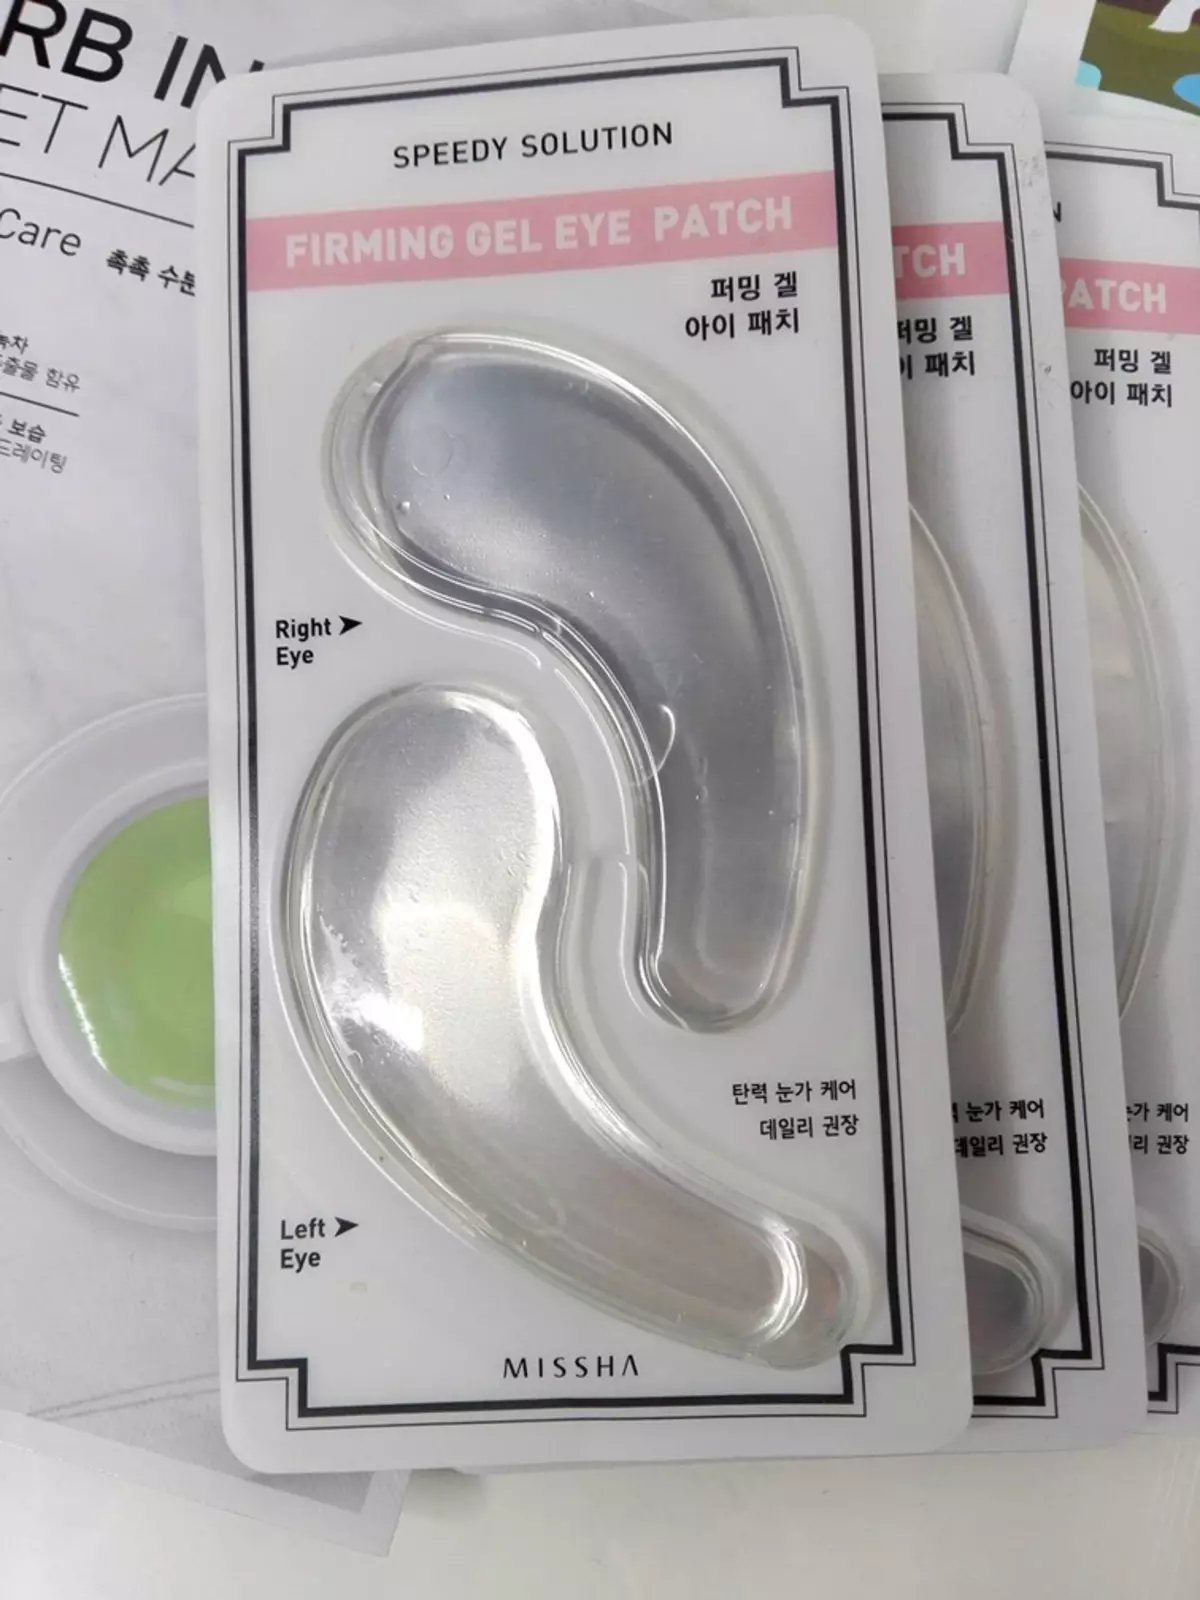 Firming gel. [Missha] Speedy solution Firming Gel Eye Patch. Speedy solution Firming Gel Eye Patch , 1g. Патчи подтягивающие. Eye Gel Patches патчи для кожи вокруг глаз.